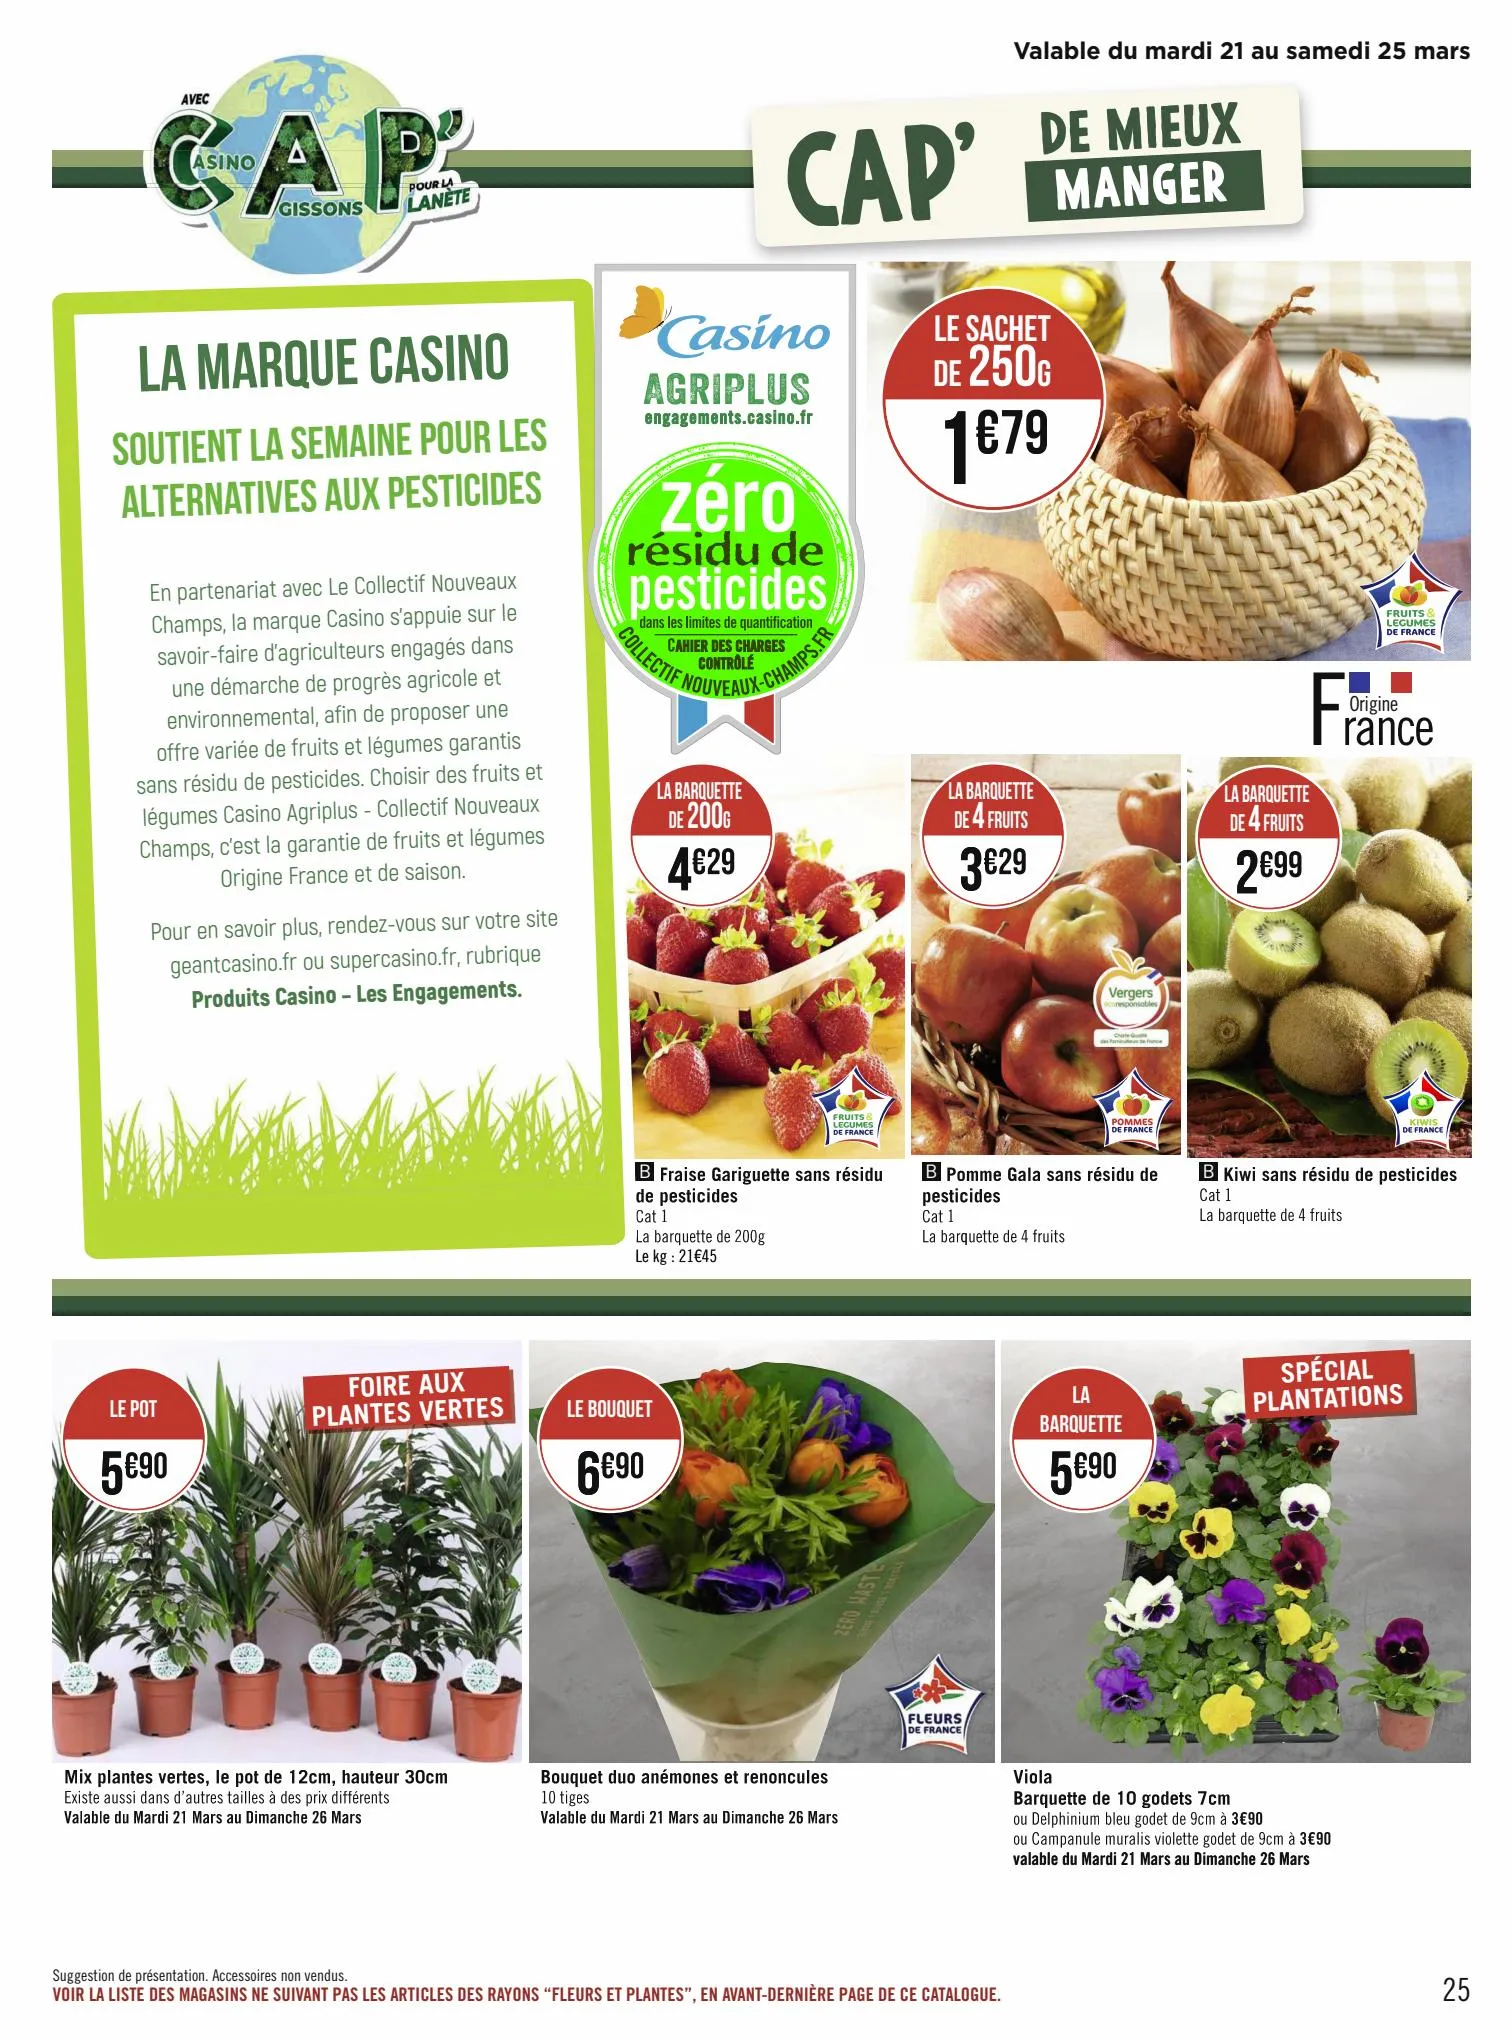 Catalogue Catalogue Casino Supermarchés, page 00025